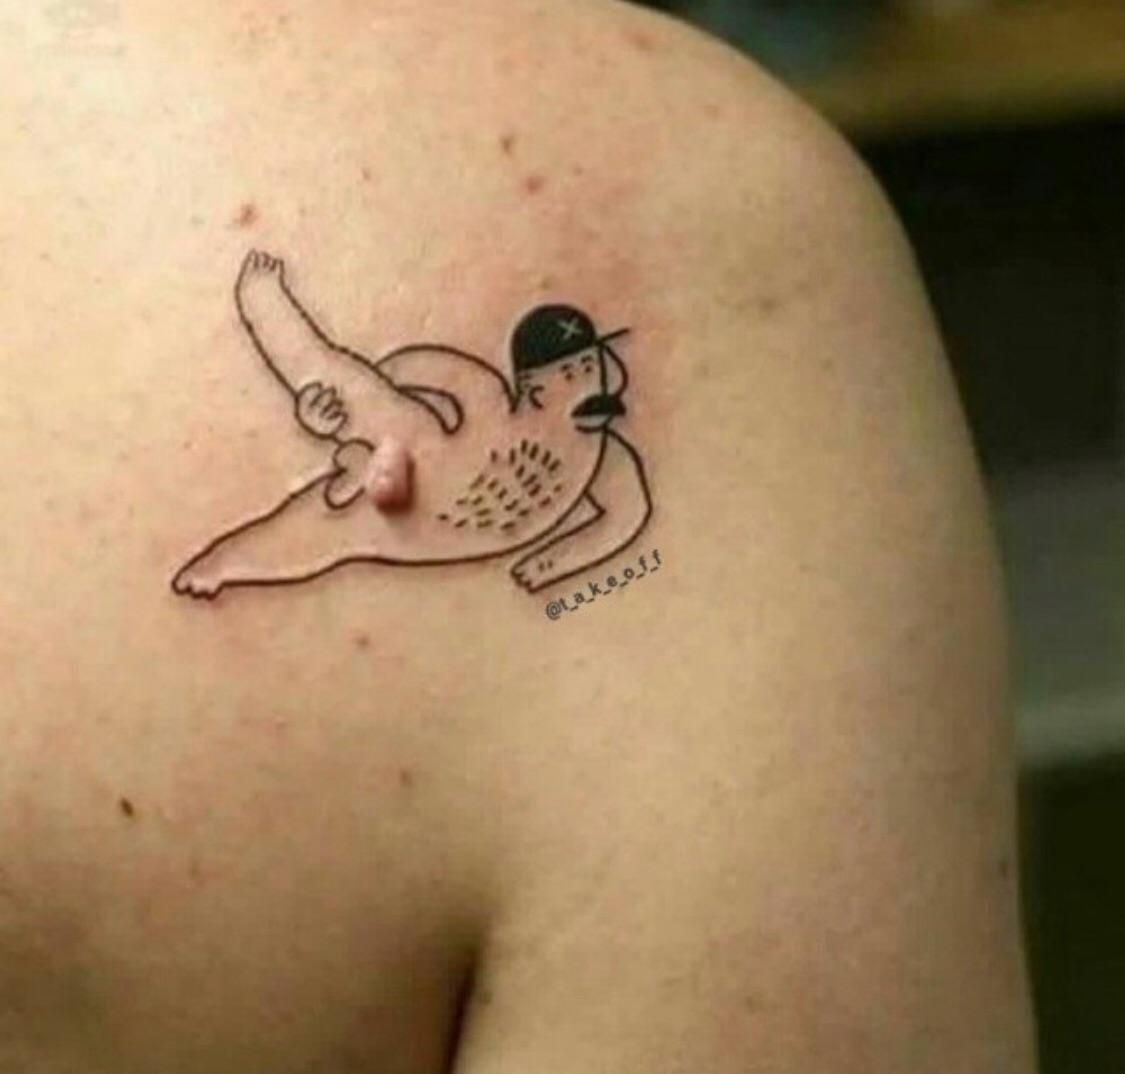 Nice tattoo...